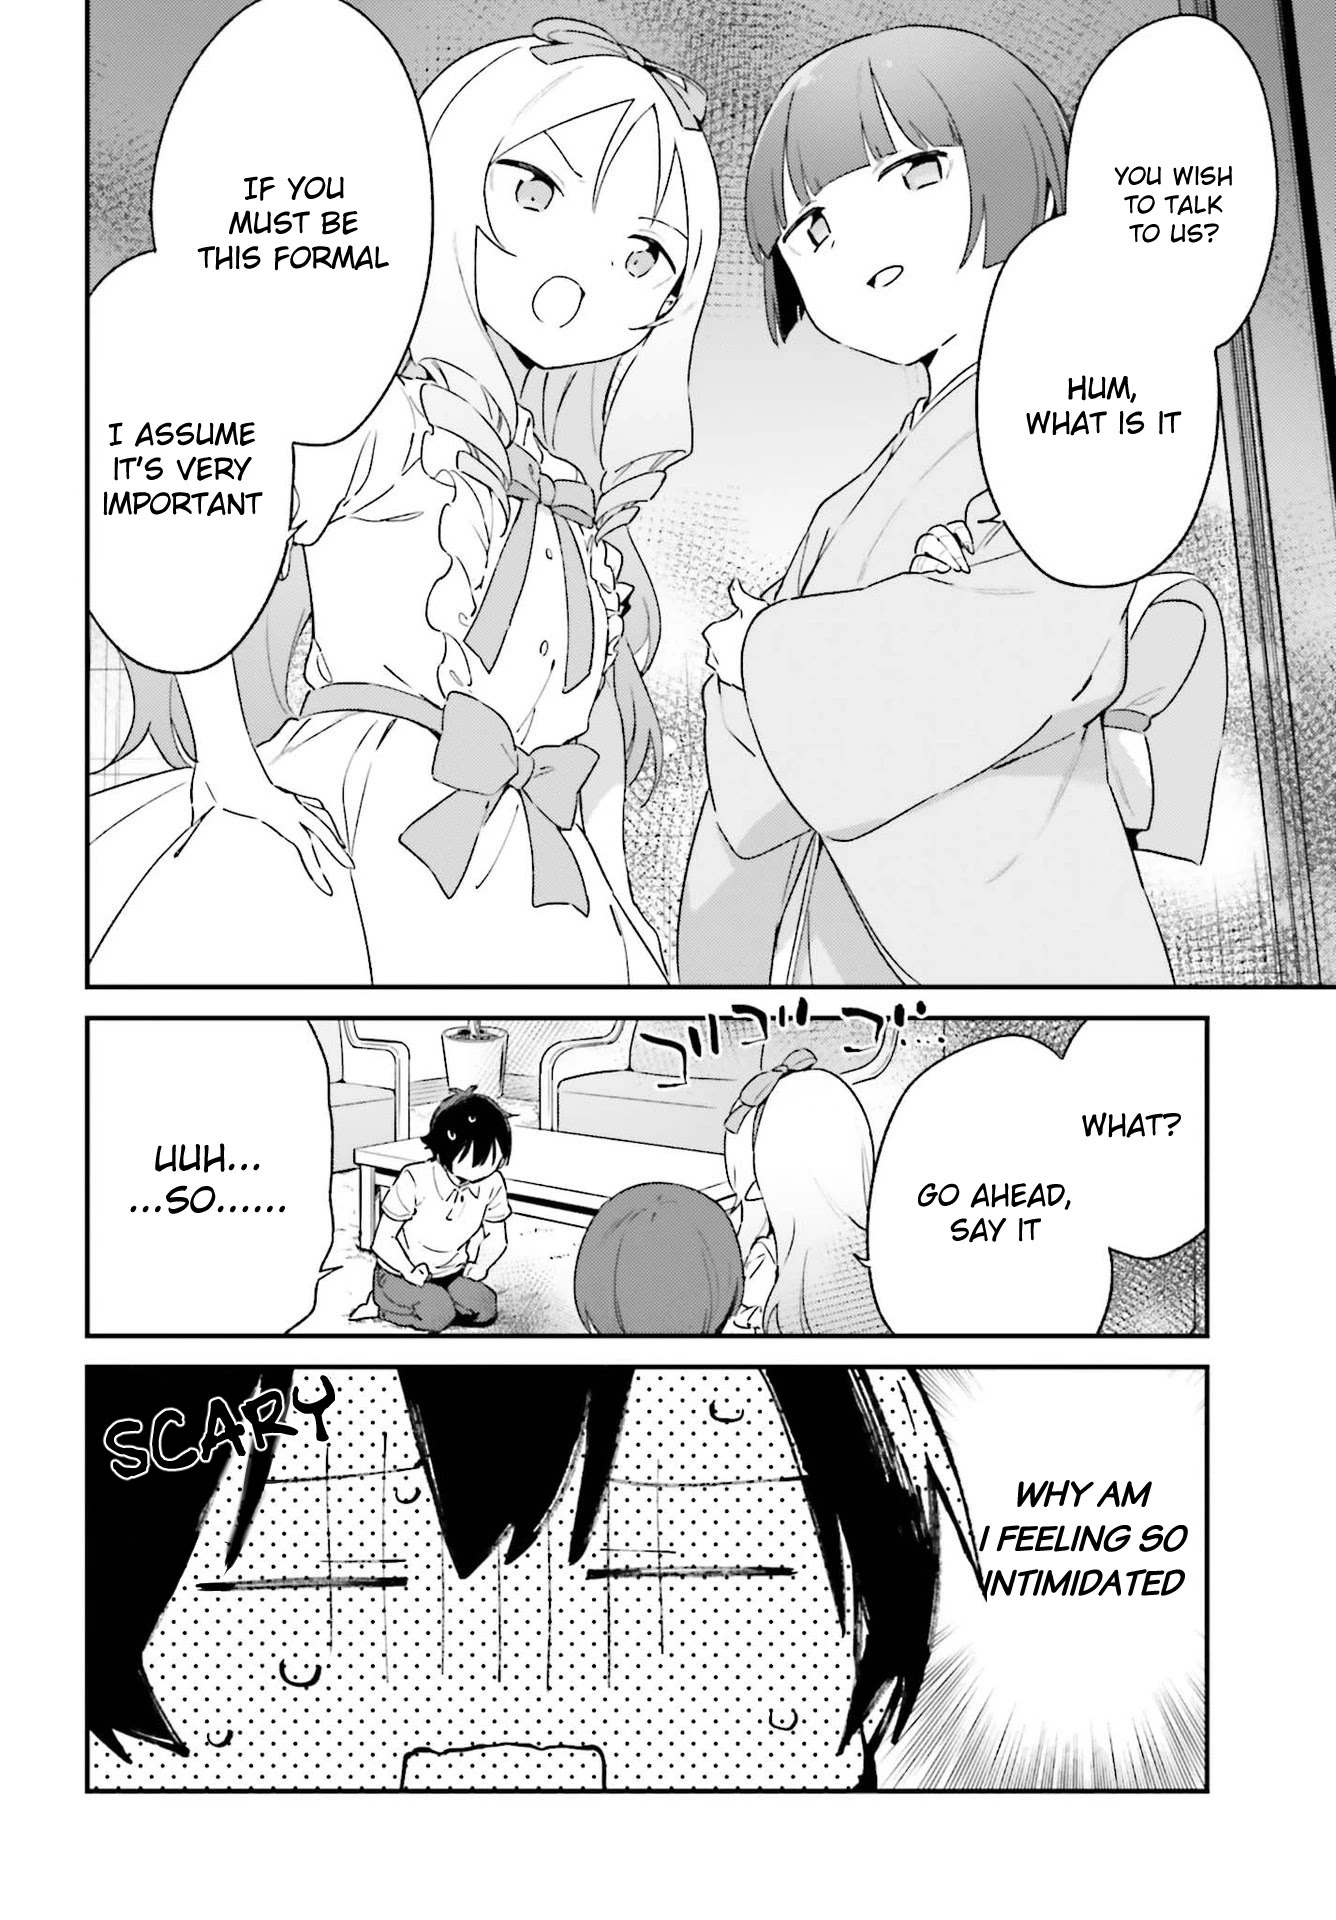 Ero Manga Sensei - 79 page 8-8cd2dce6